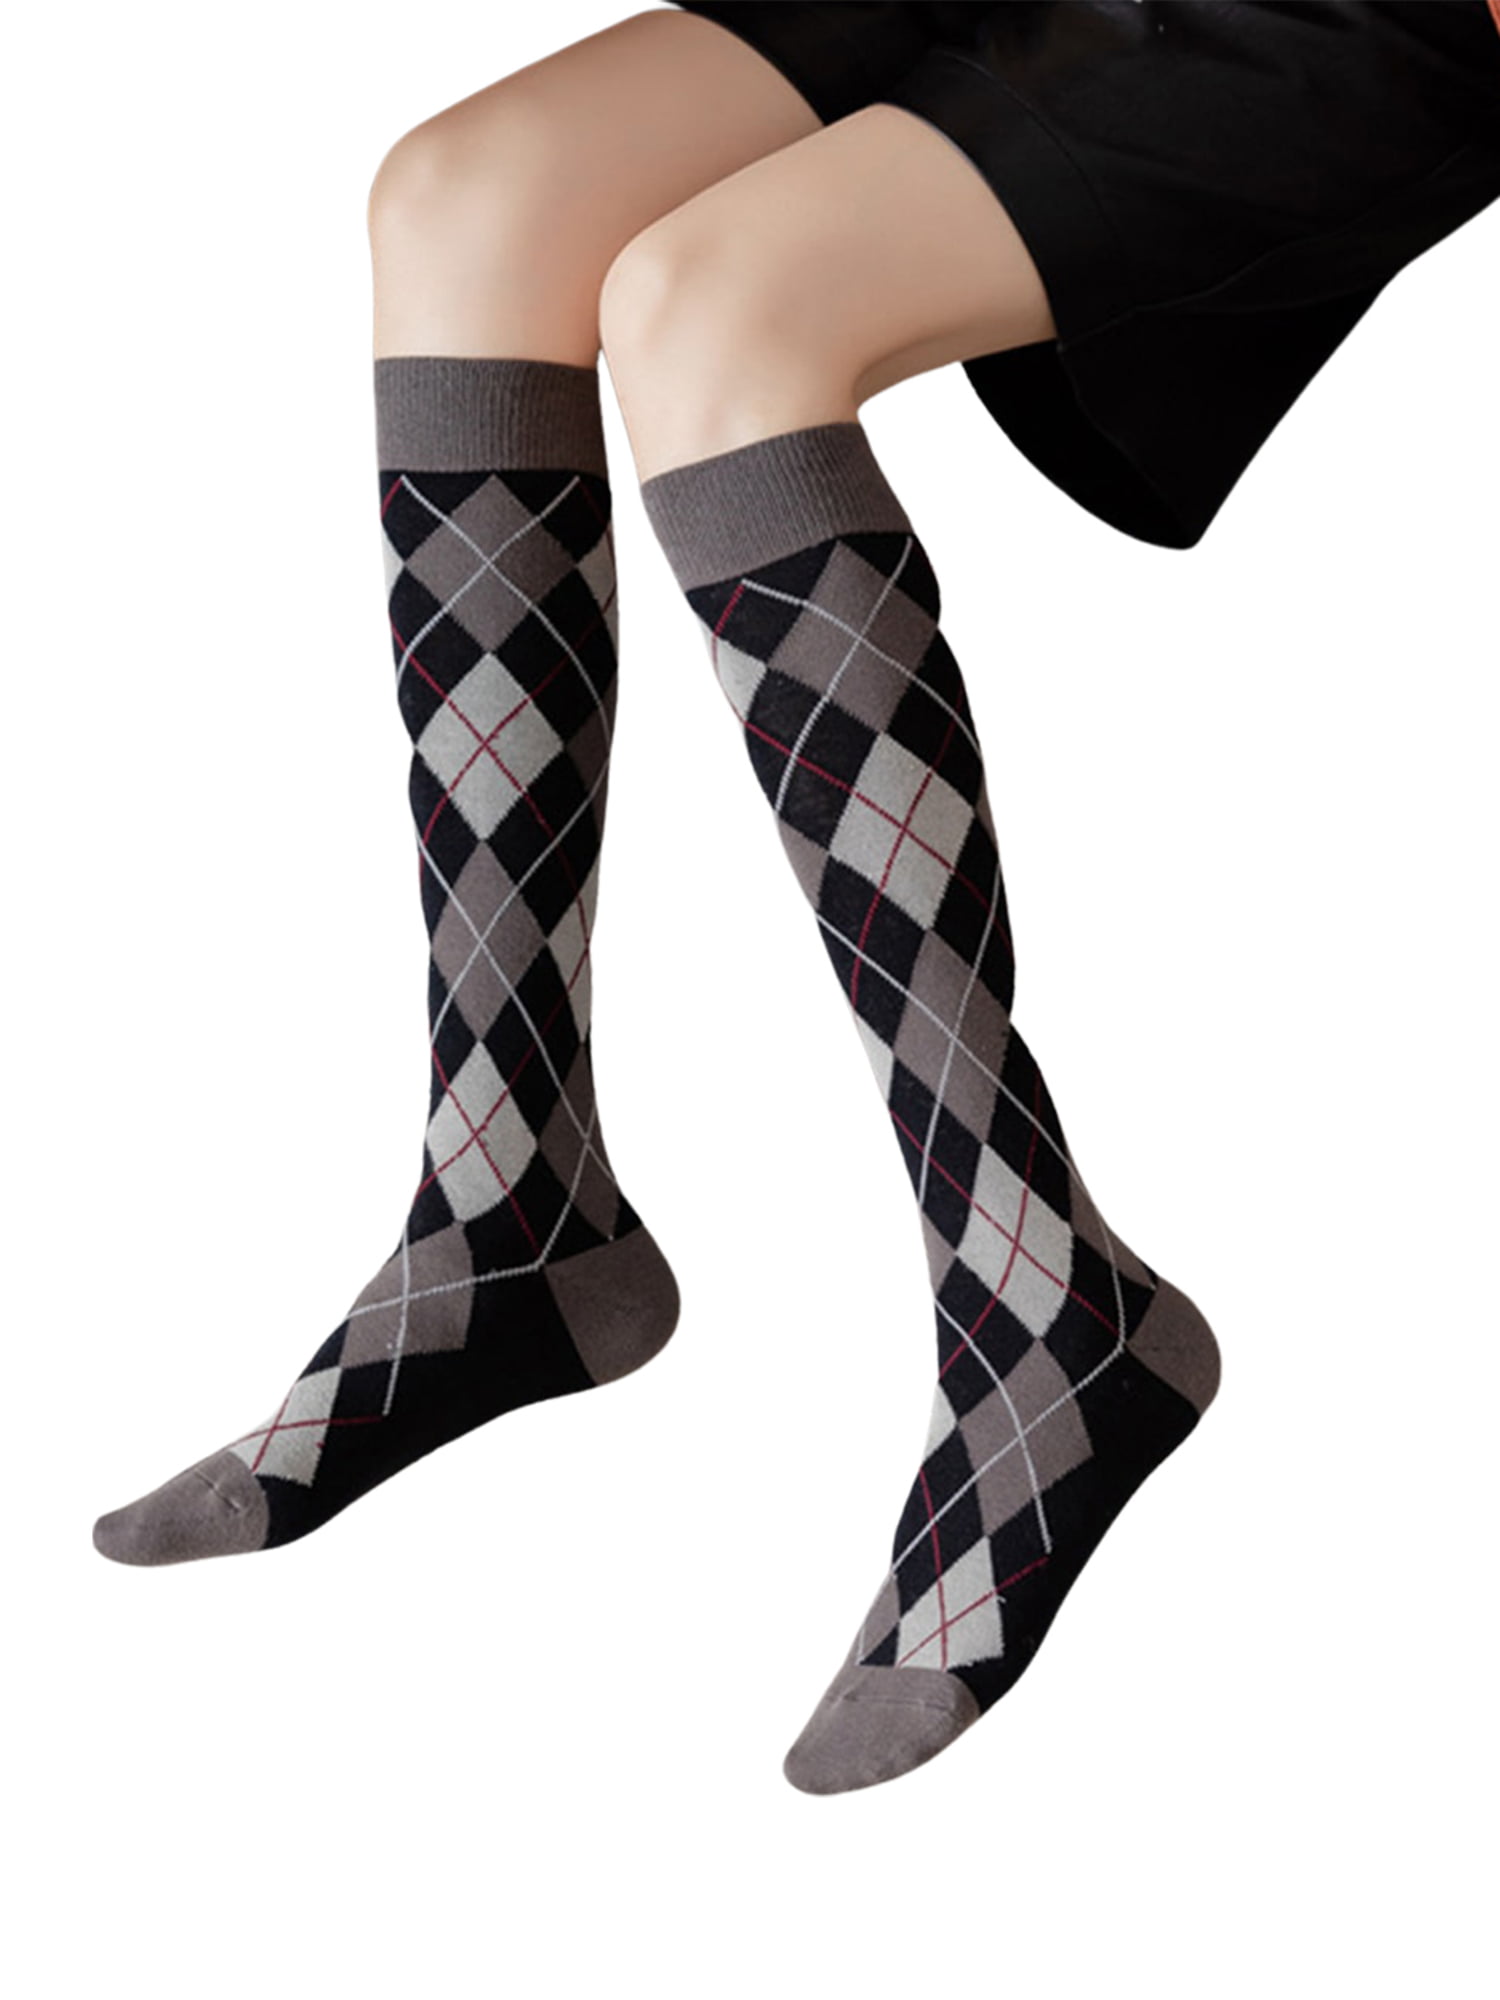 High Elasticity Girl Cotton Knee High Socks Uniform Dark Camouflage Women Tube Socks 